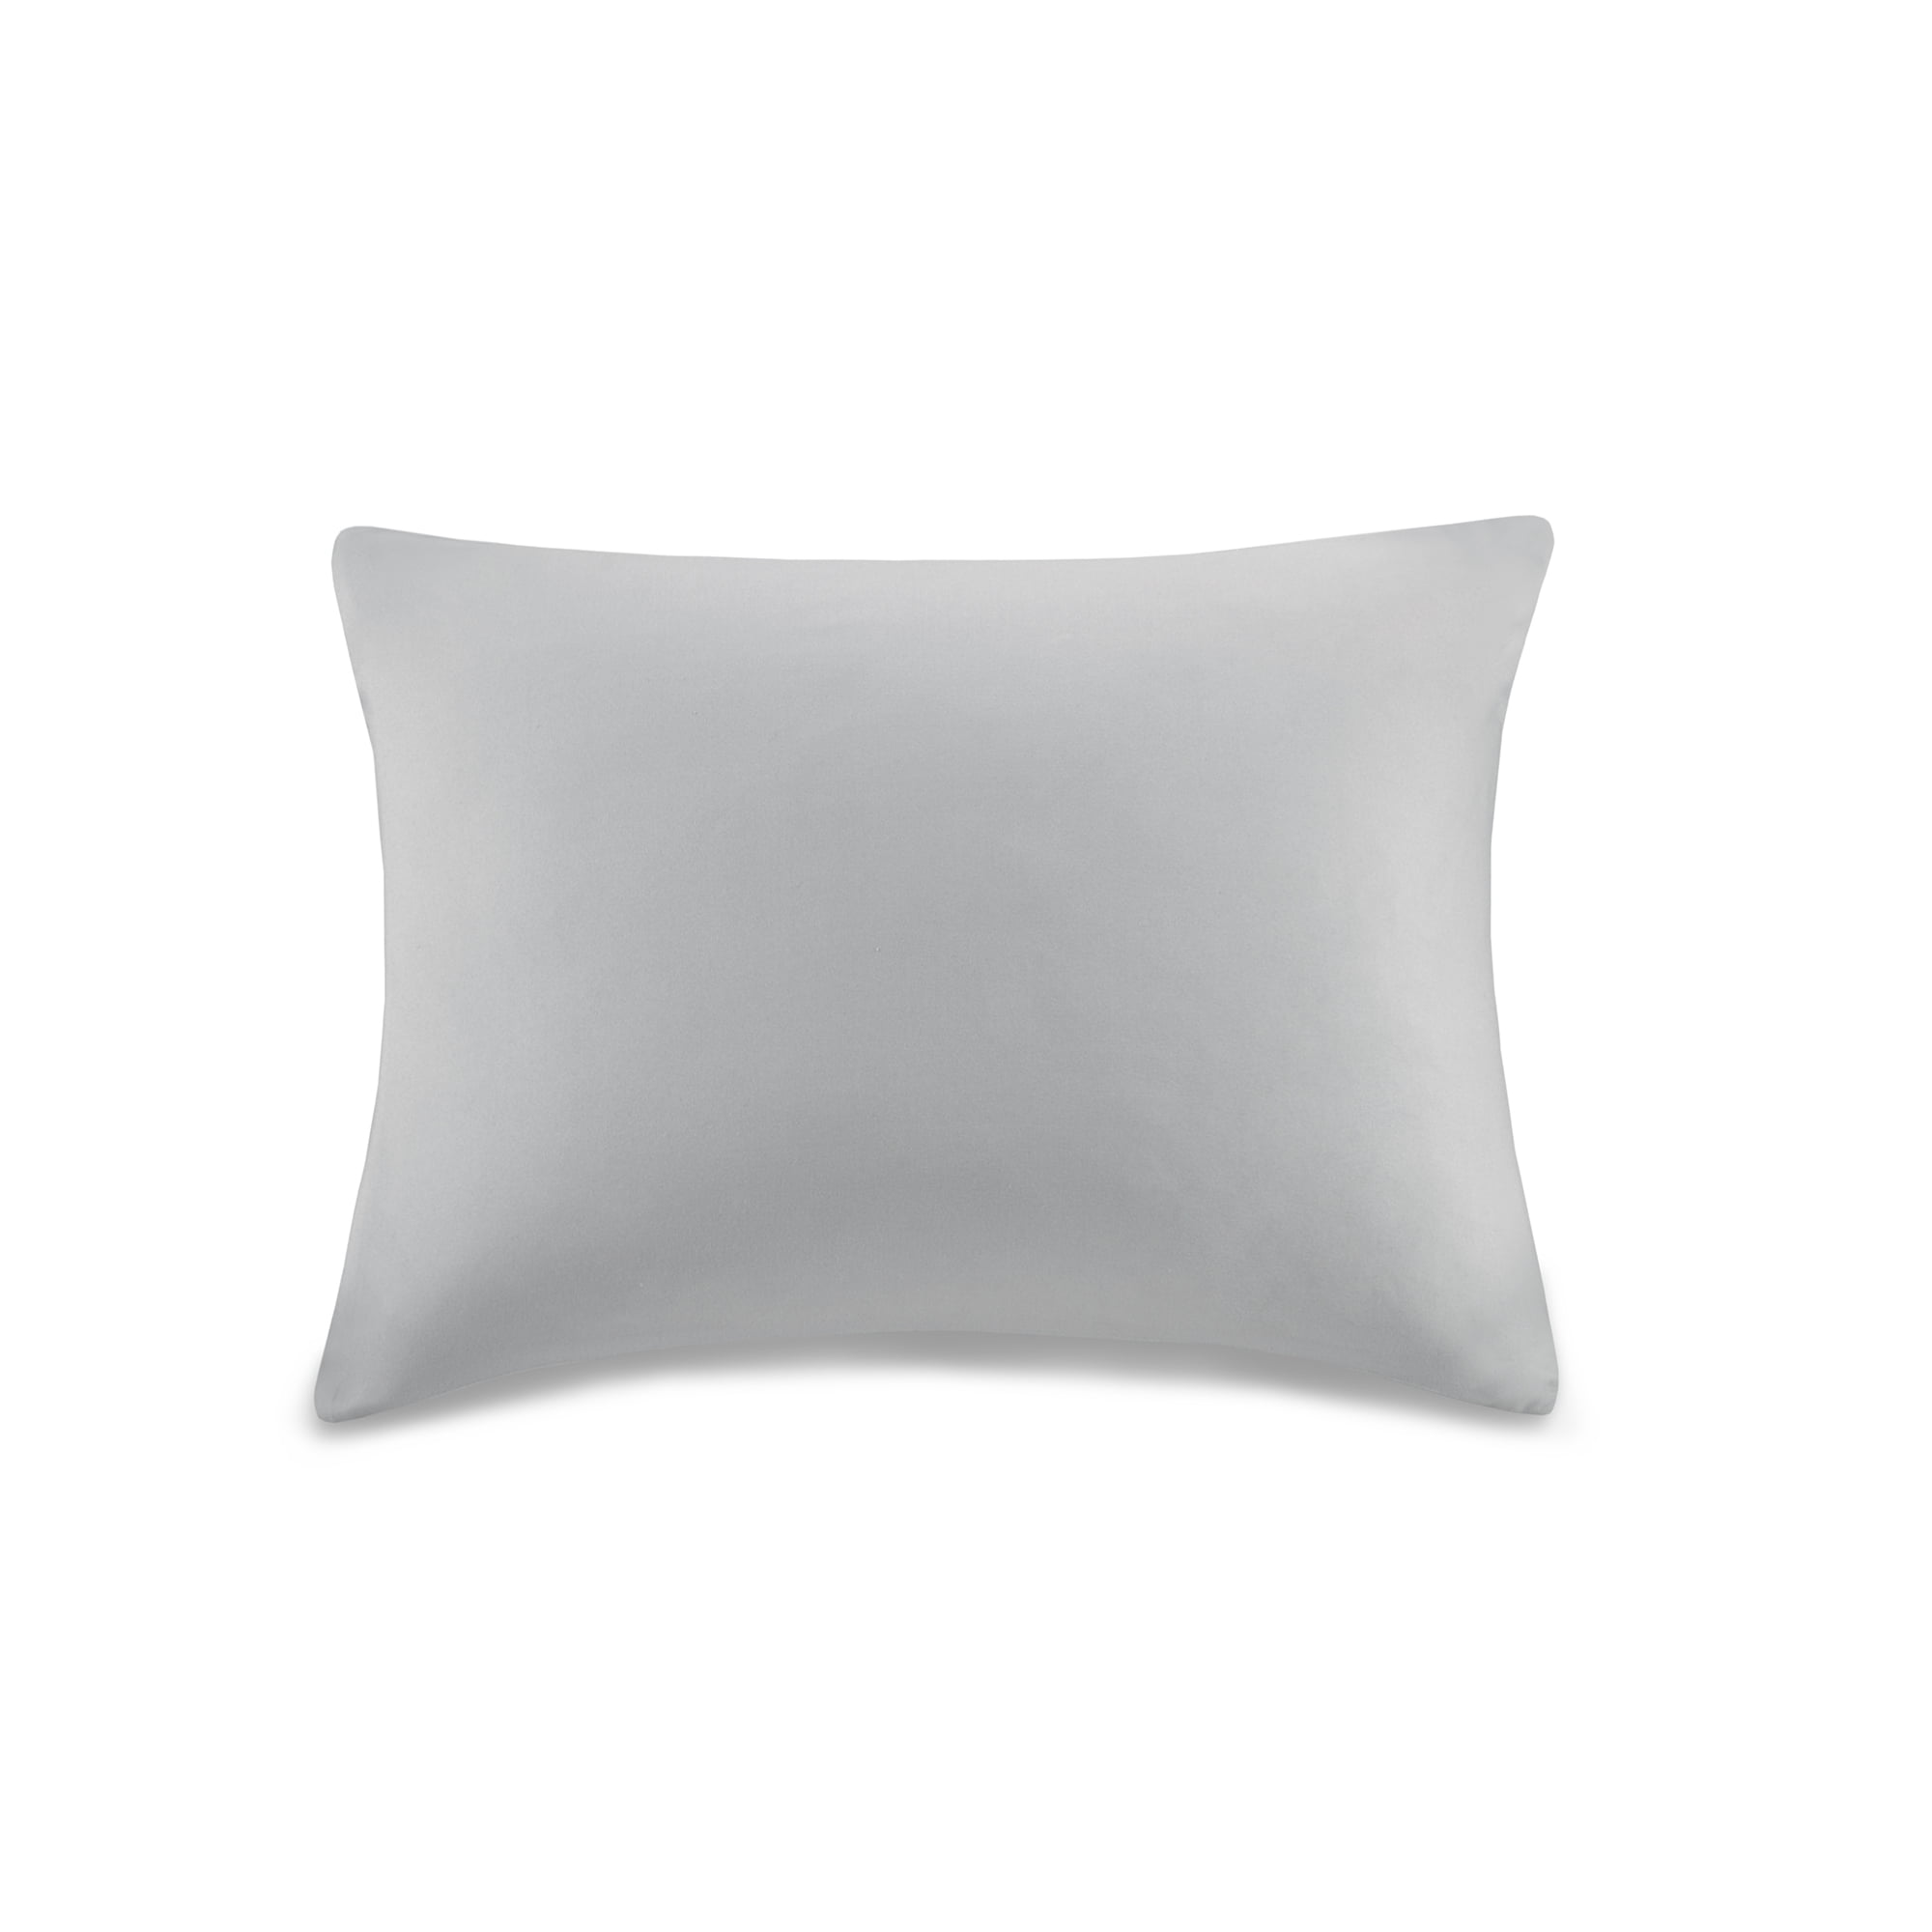 Gray Travel Pillow Cover Case 14”X 20” Pillow Zipper Pillowcase AllerEase New #z 